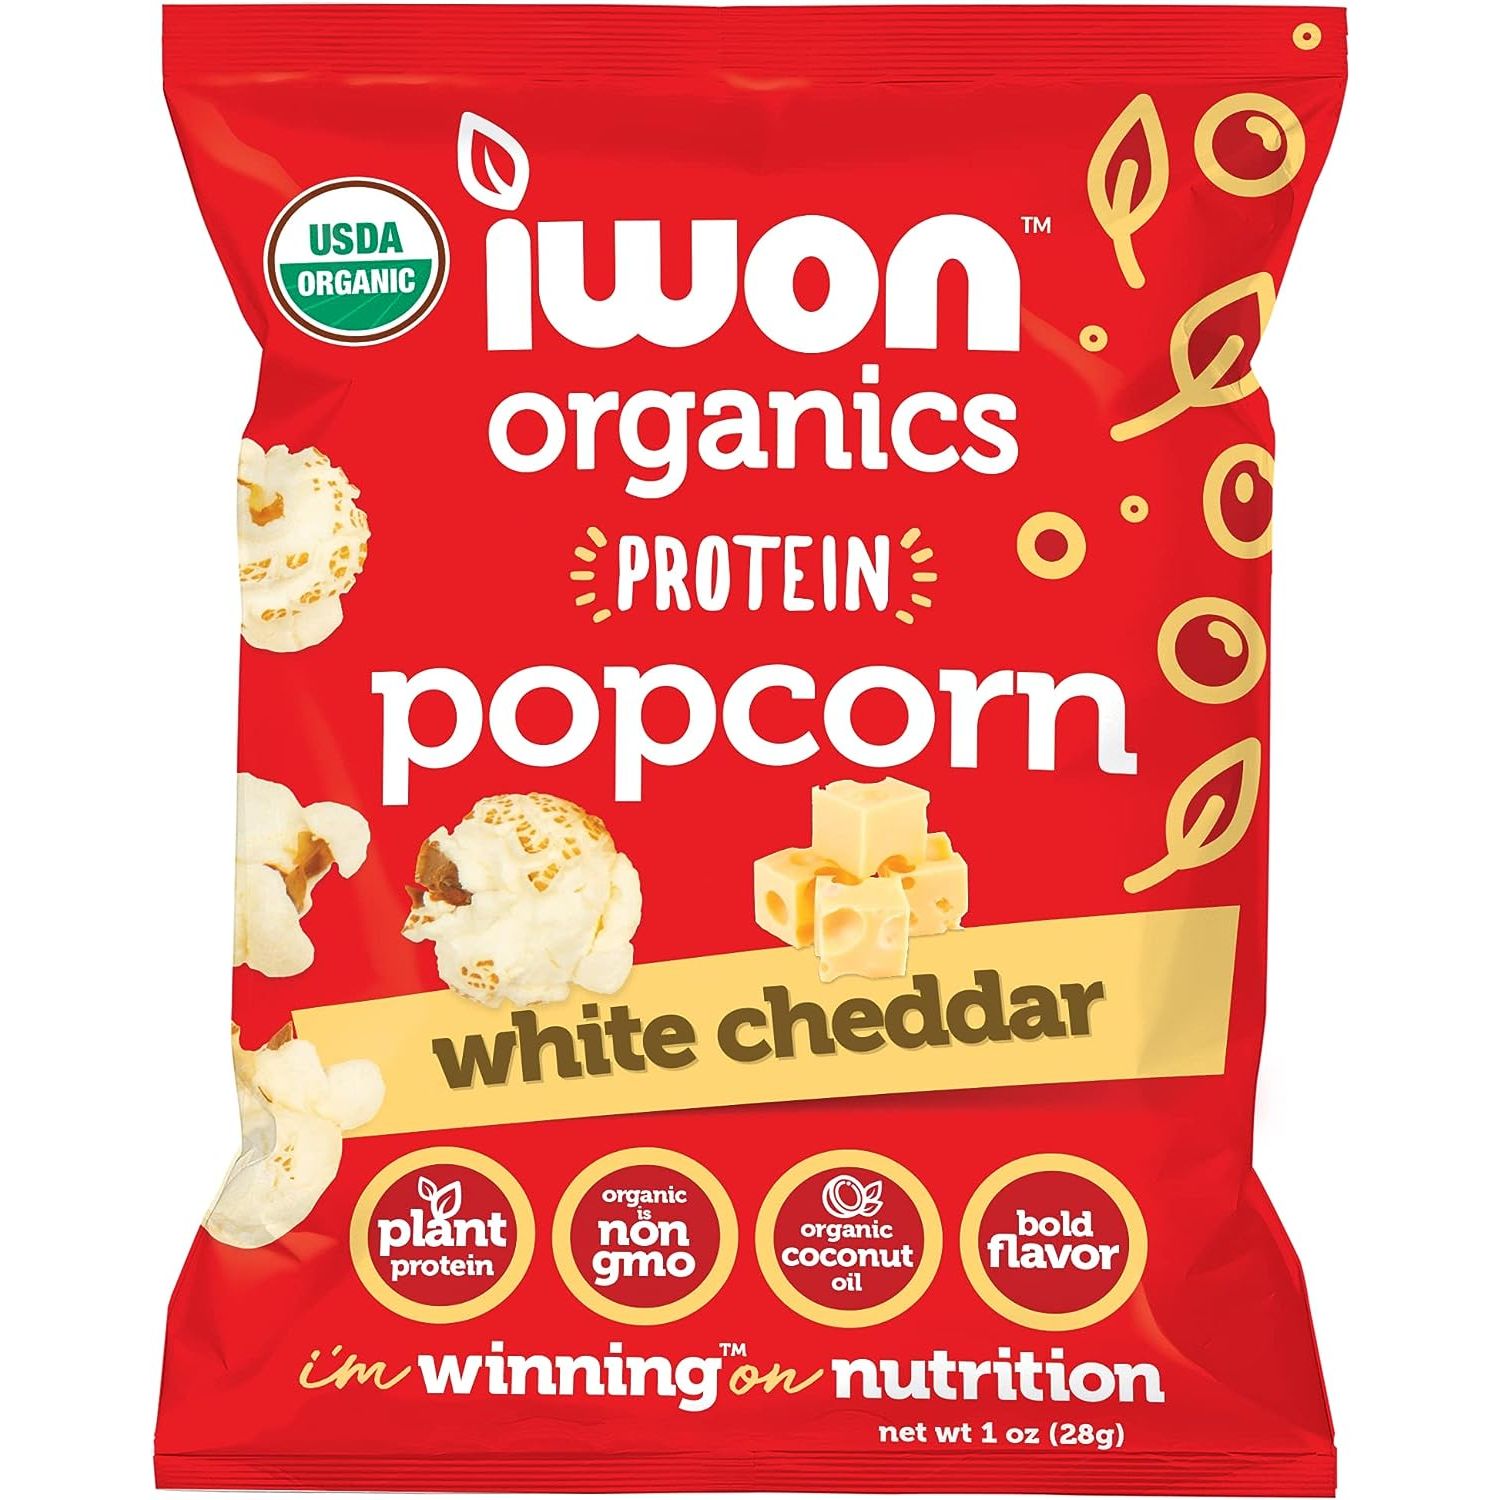 IWON Organics Protein Popcorn (1 bag) Protein Snacks White Cheddar IWON Organics iwon-organics-protein-popcorn-1-bag